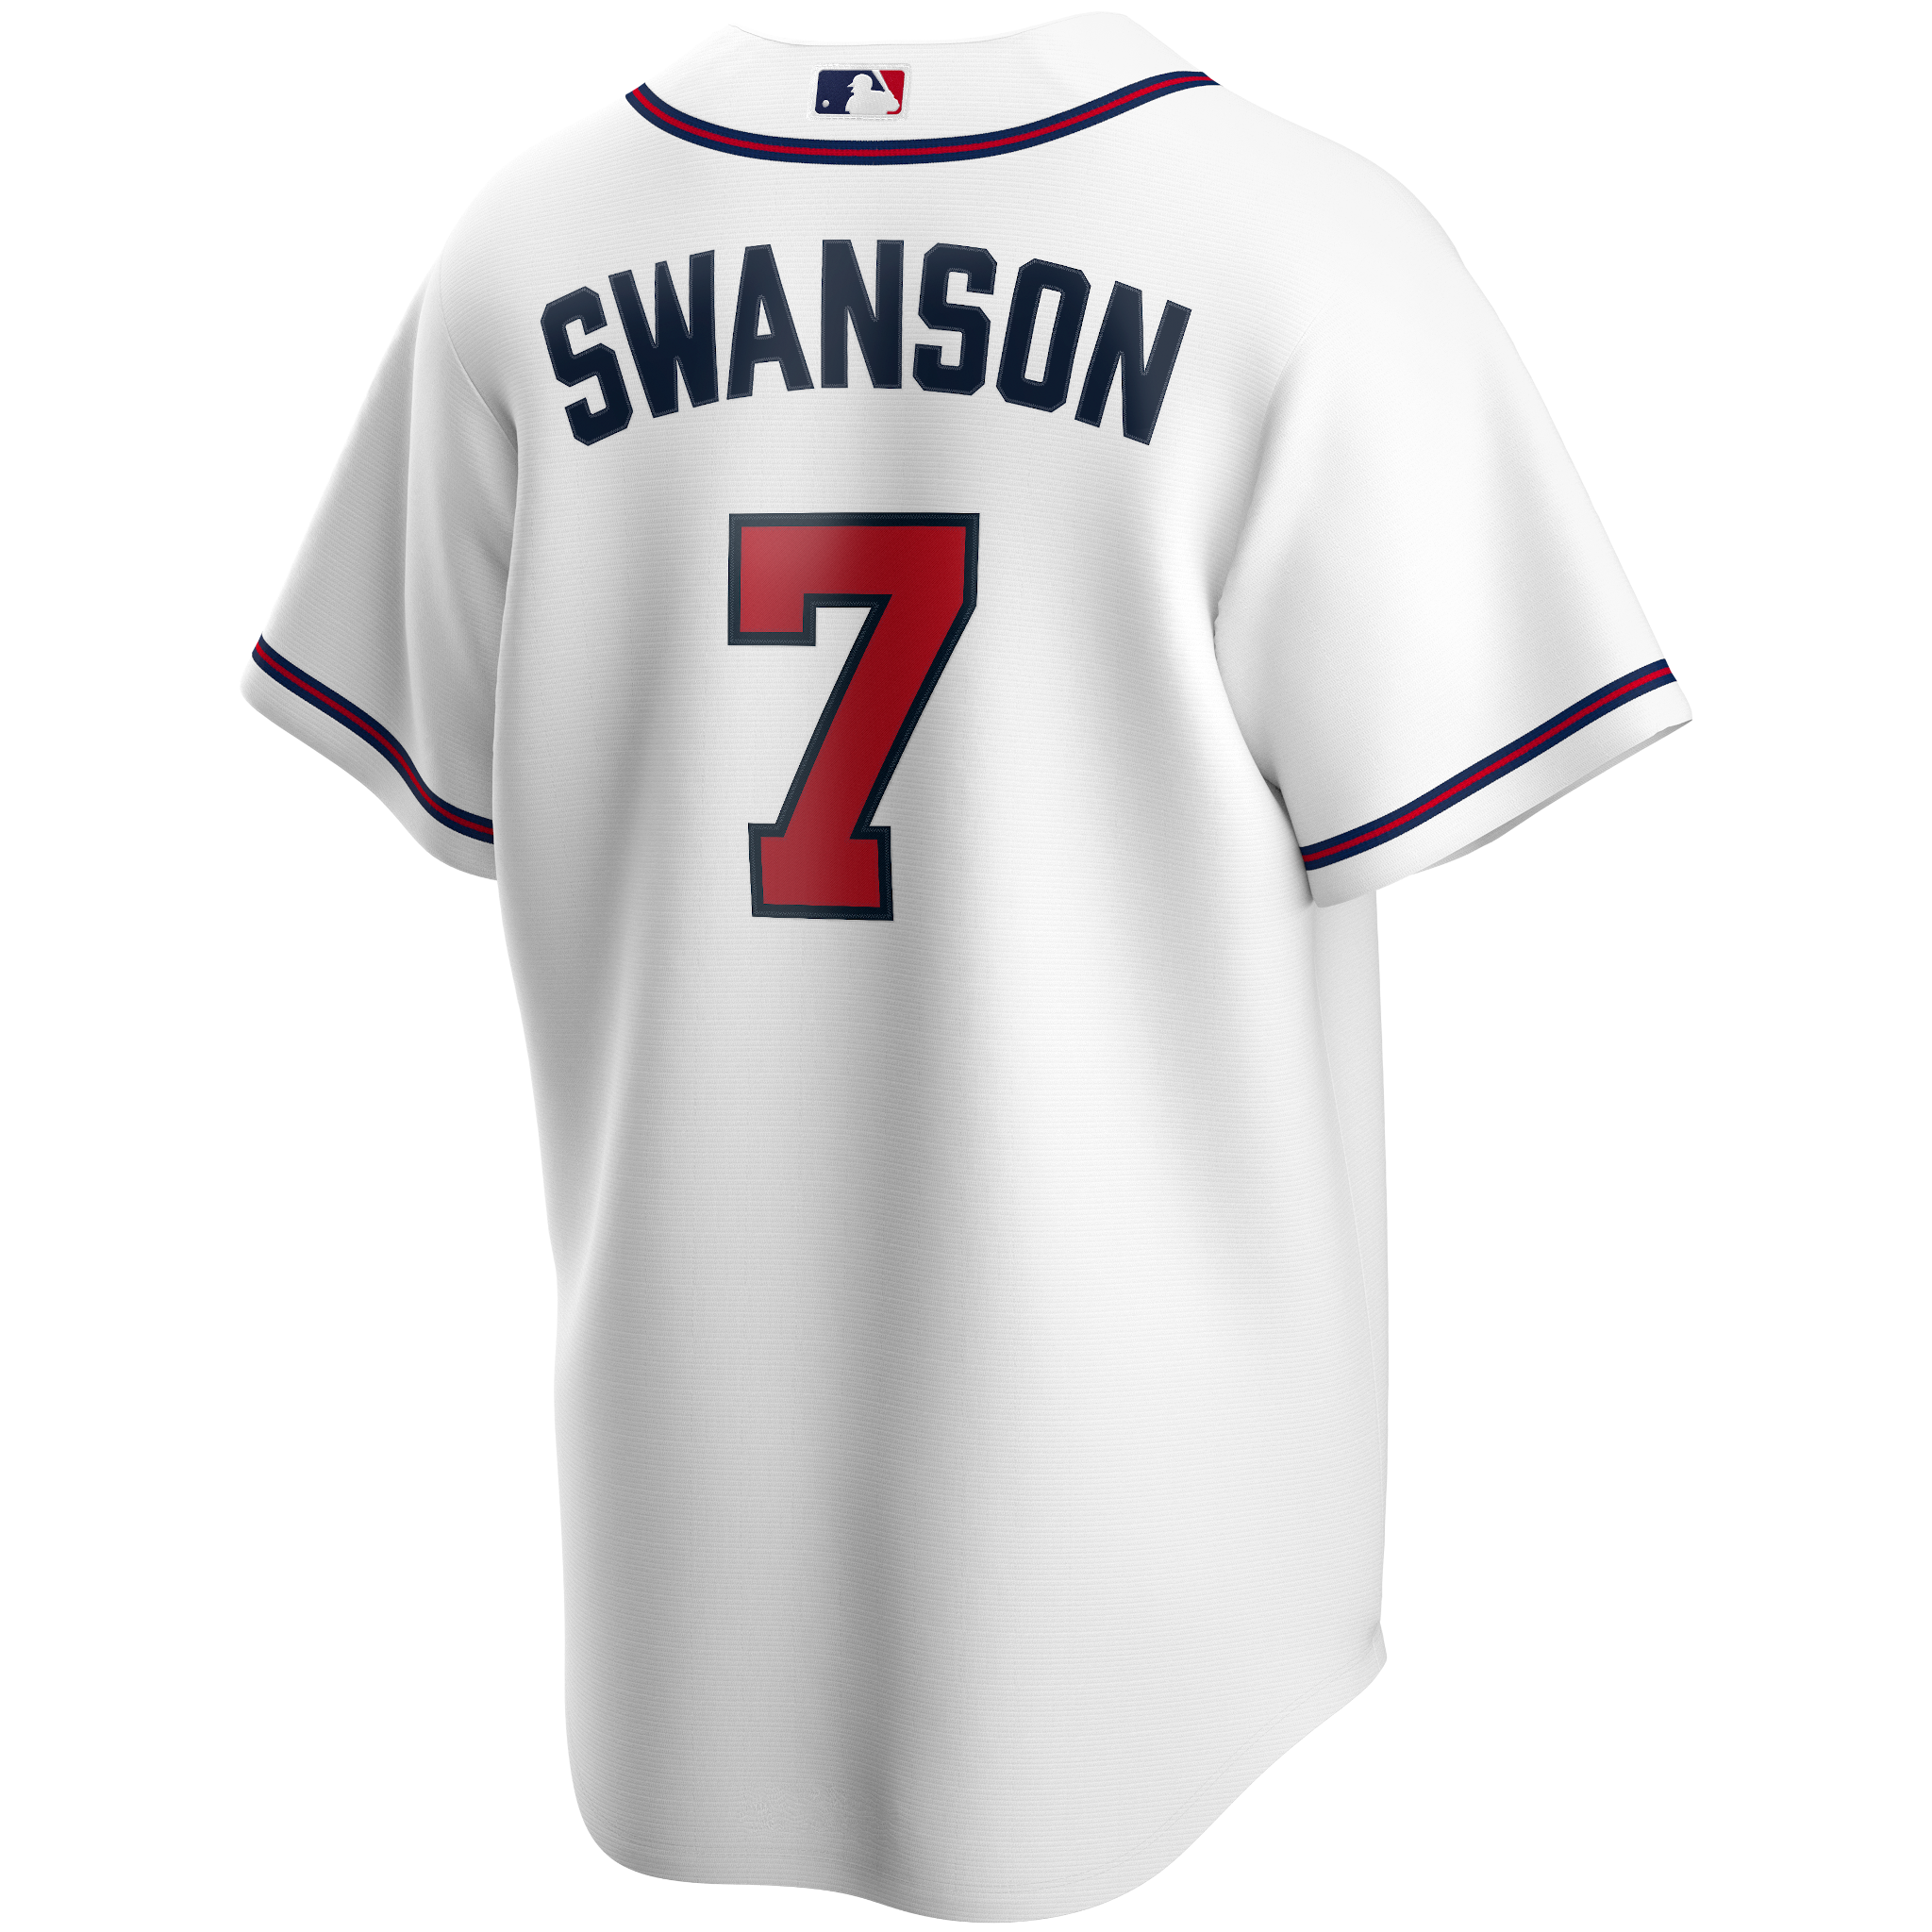 swanson braves shirt